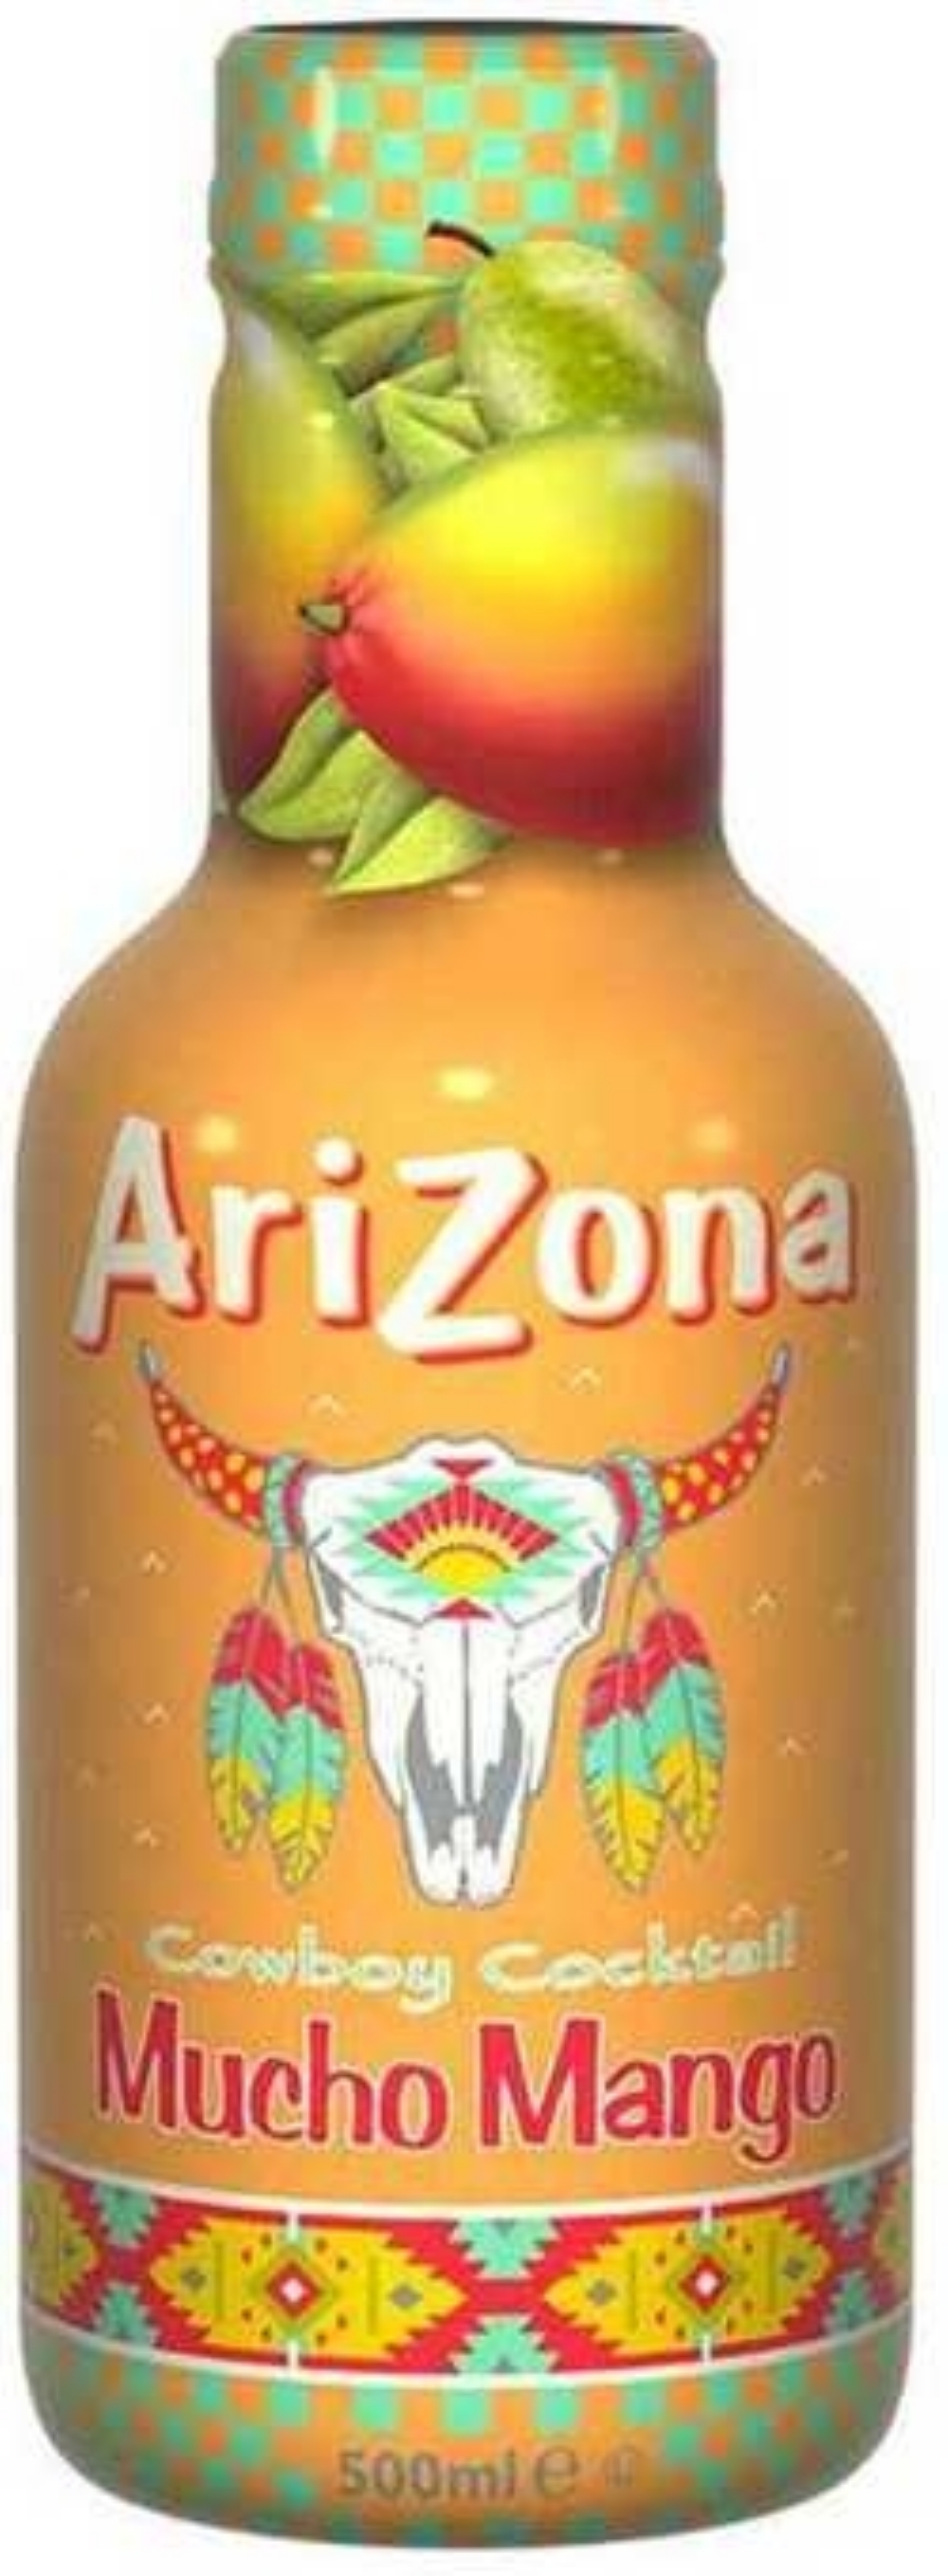 ARIZONA Cowboy Cocktail - Mucho Mango Juice Drink 500ml